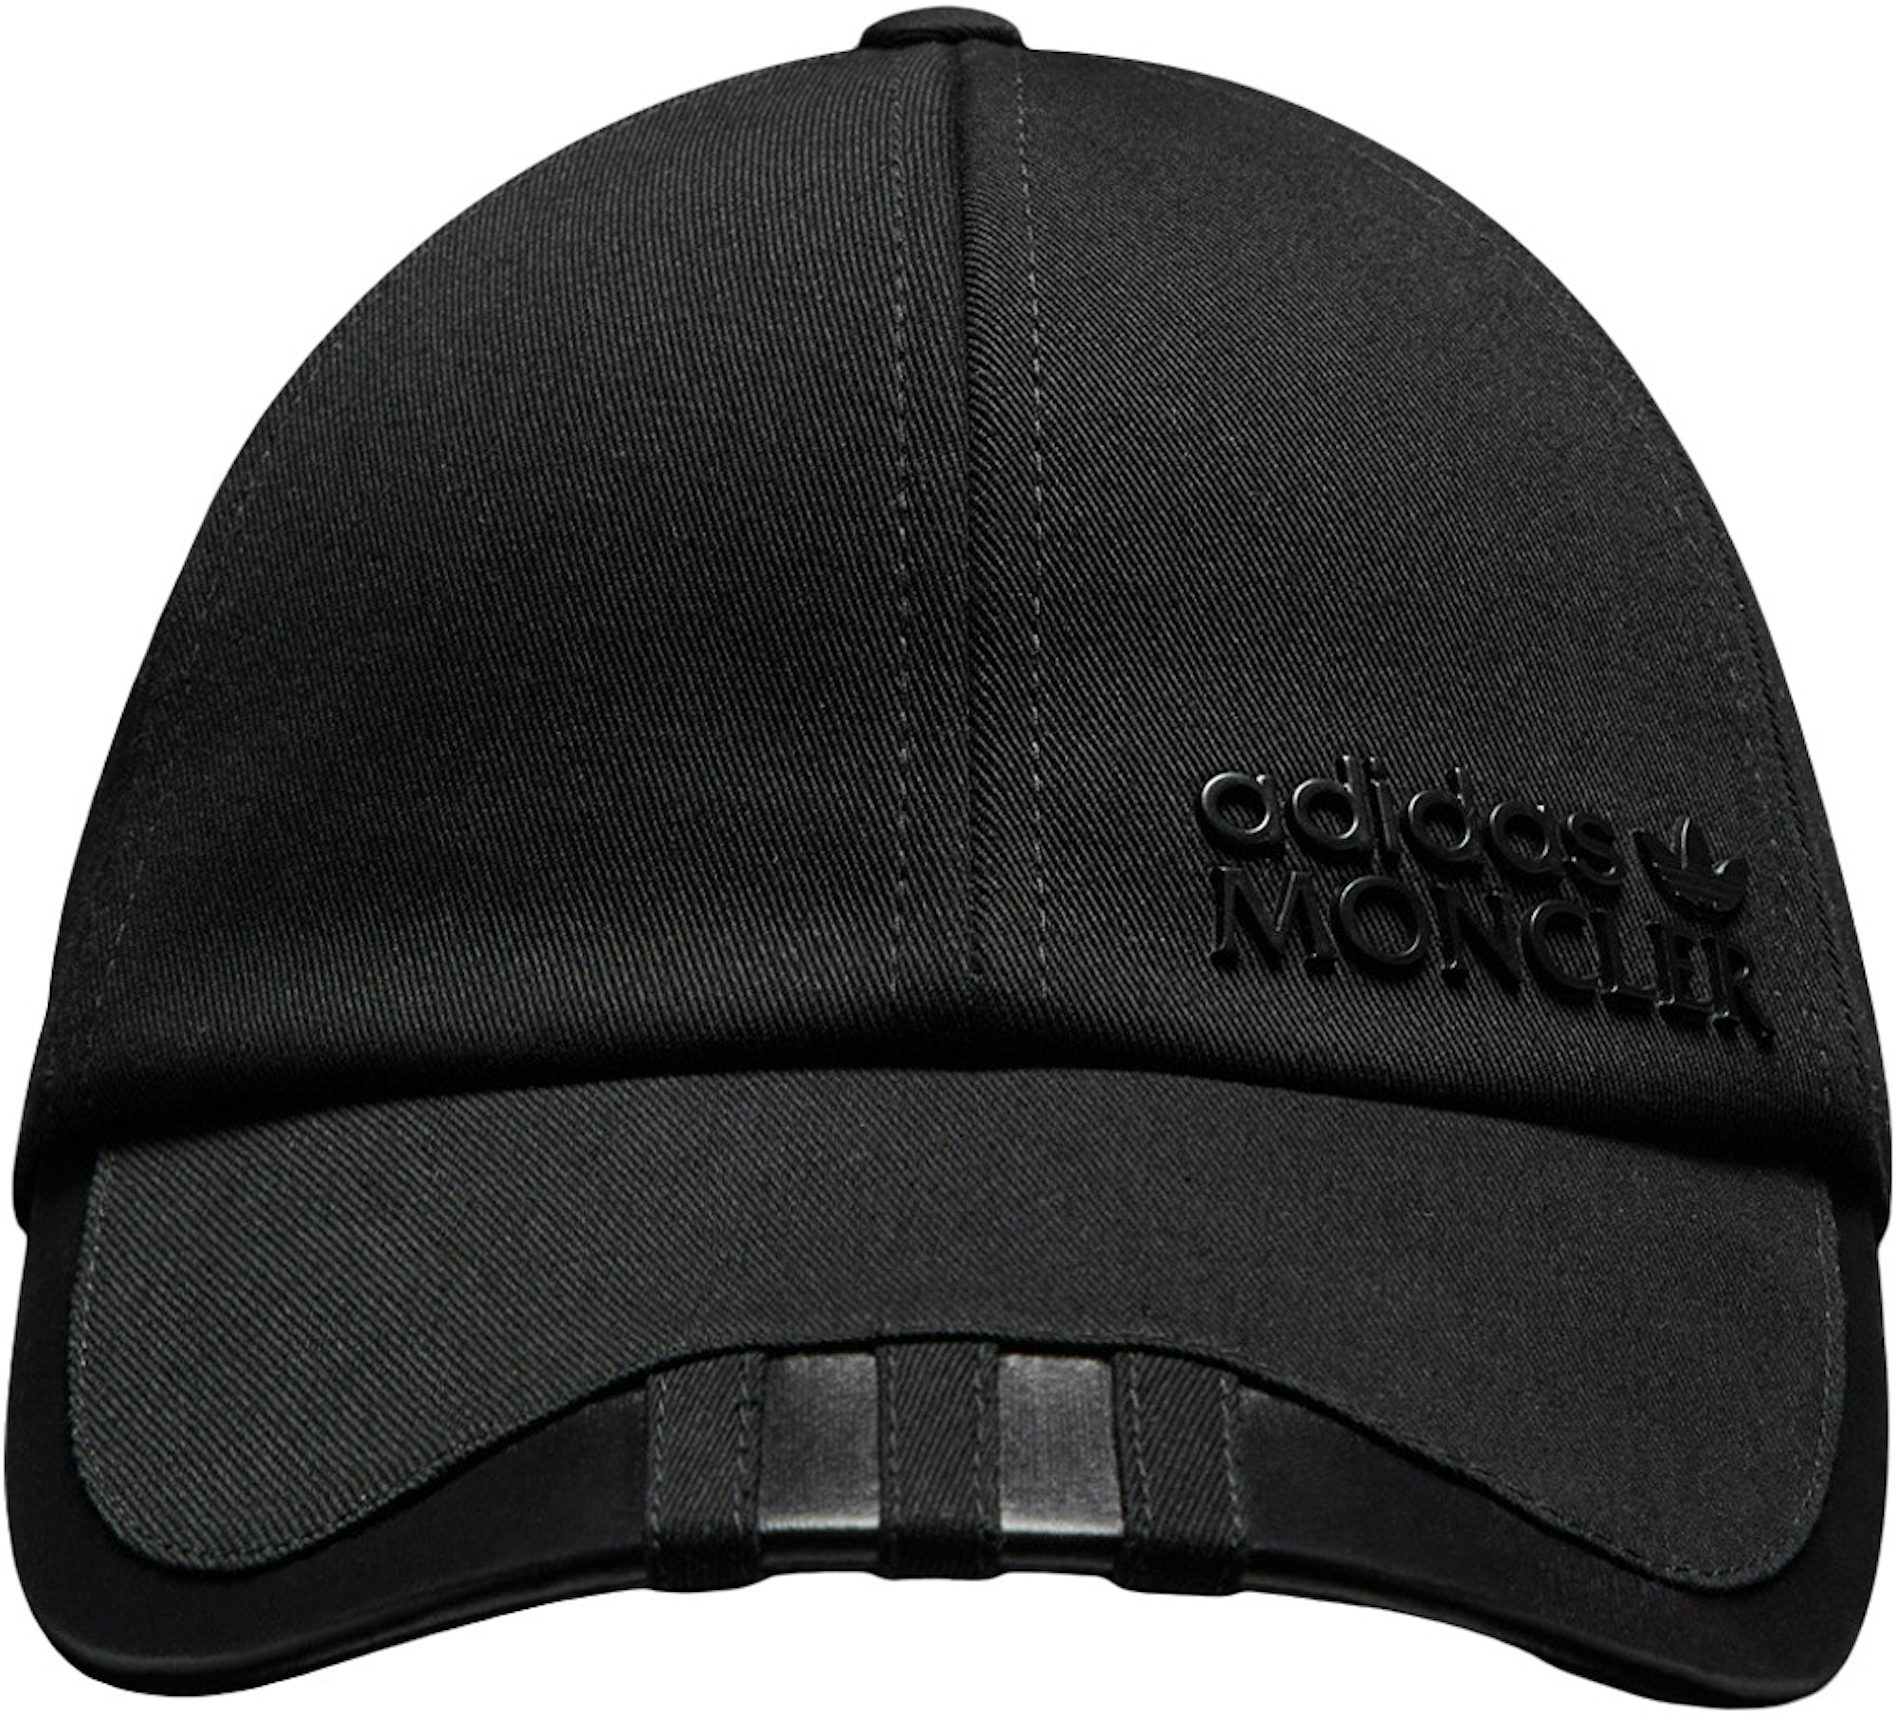 Moncler x adidas Originals Gabardine Baseball Cap Black - FW23 - US